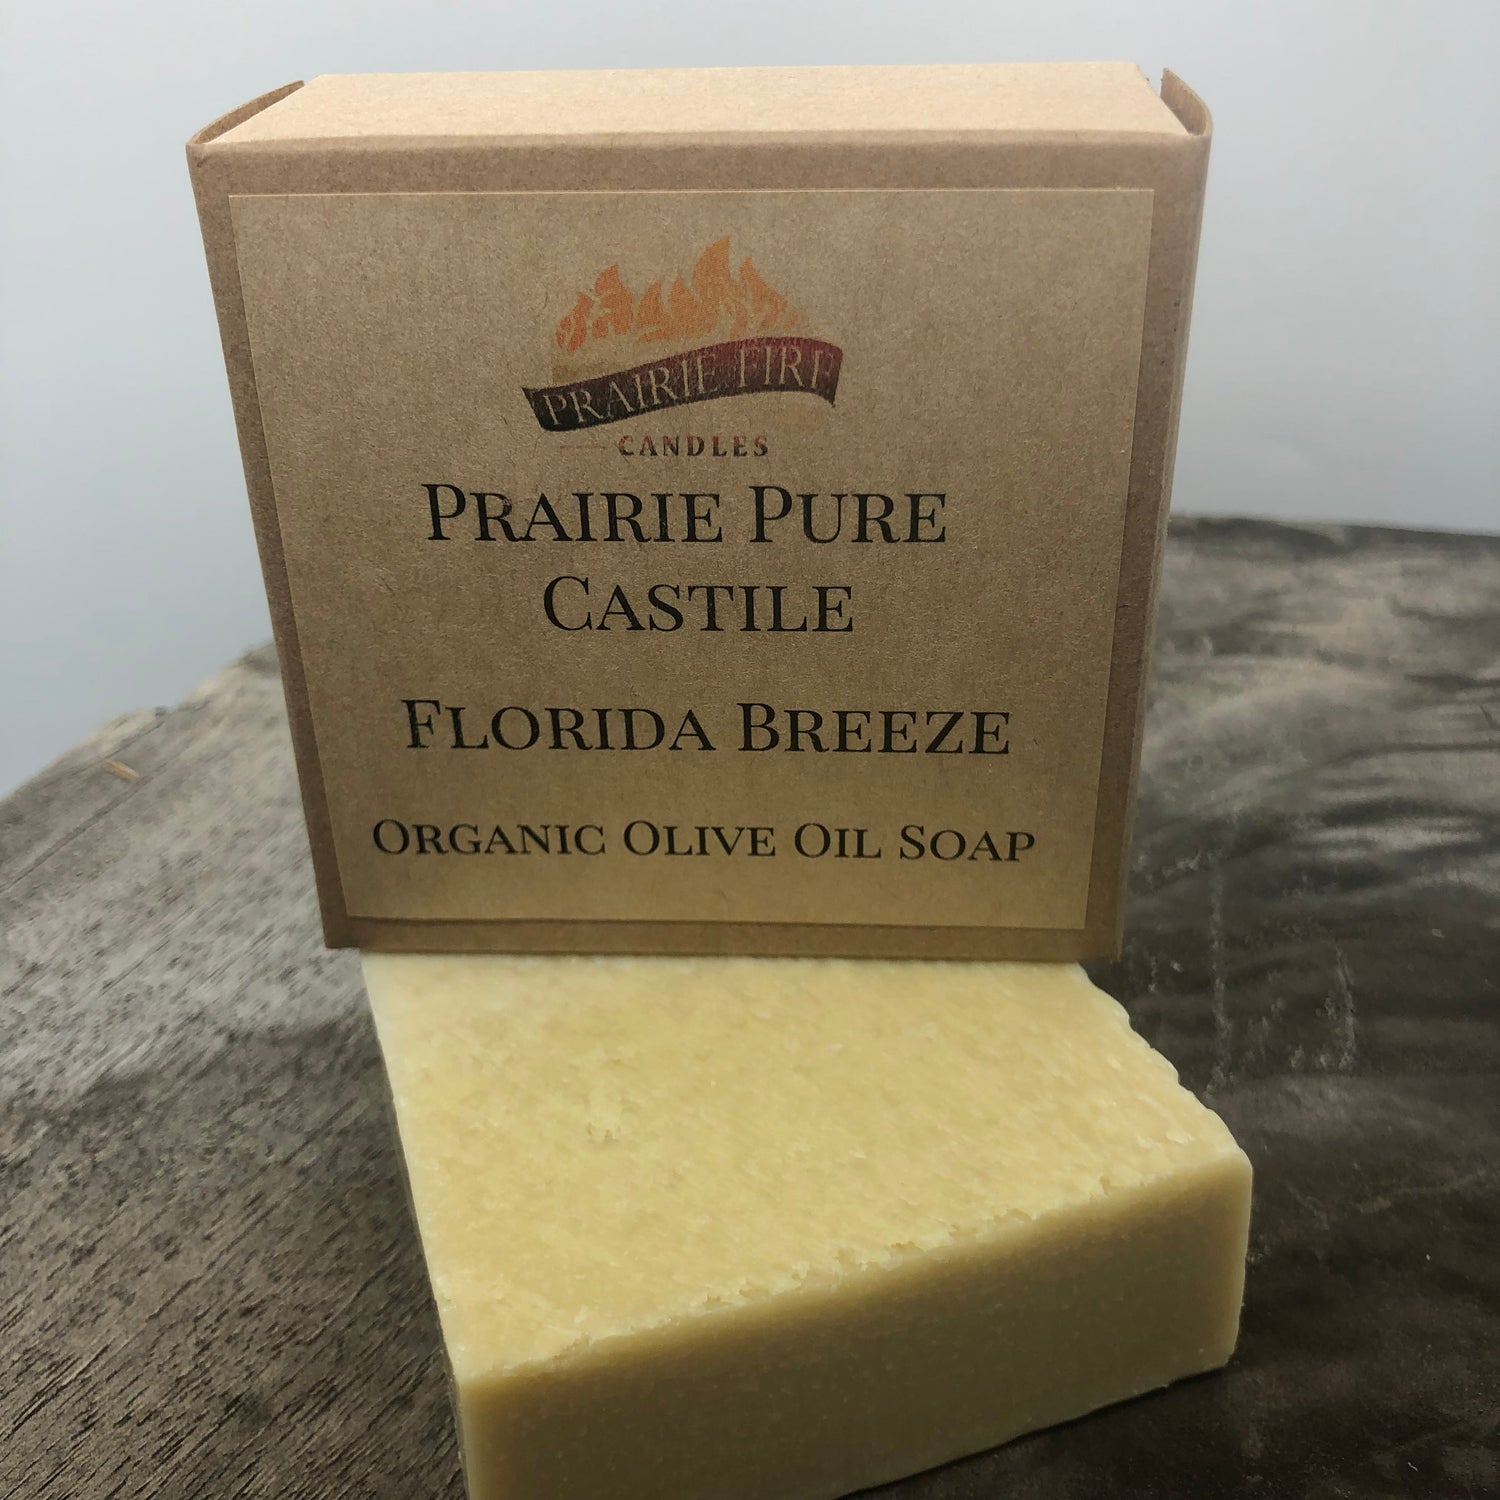 Florida Breeze Real Castile Organic Olive Oil Soap for Sensitive Skin - Dye Free - 100% Certified Organic Extra Virgin Olive Oil-1